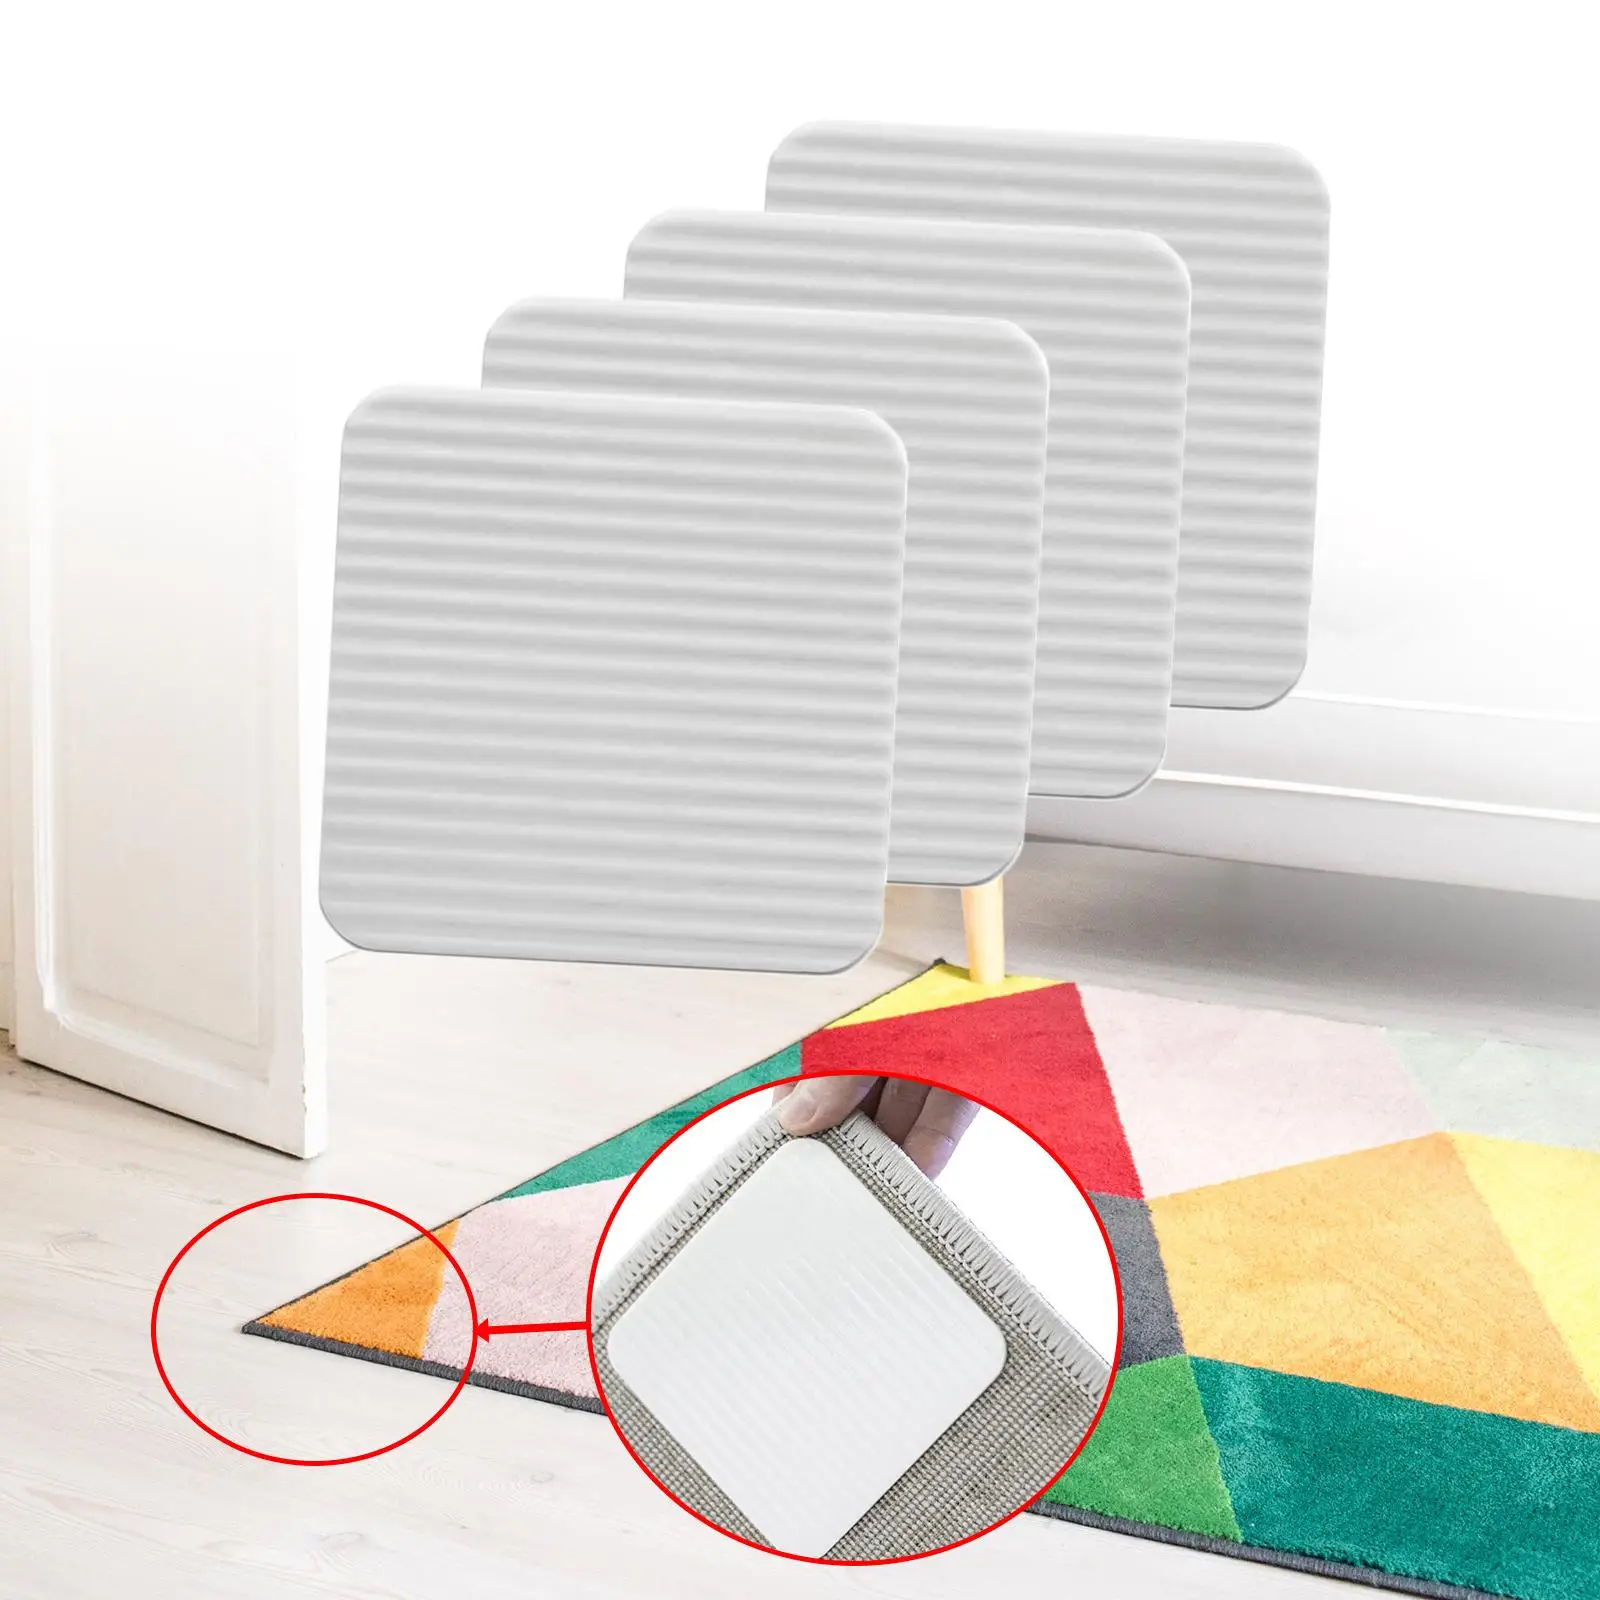 4x Rug Corner Grippers Anti Slip Washable Carpet Stickers for Bathroom Tile Floors